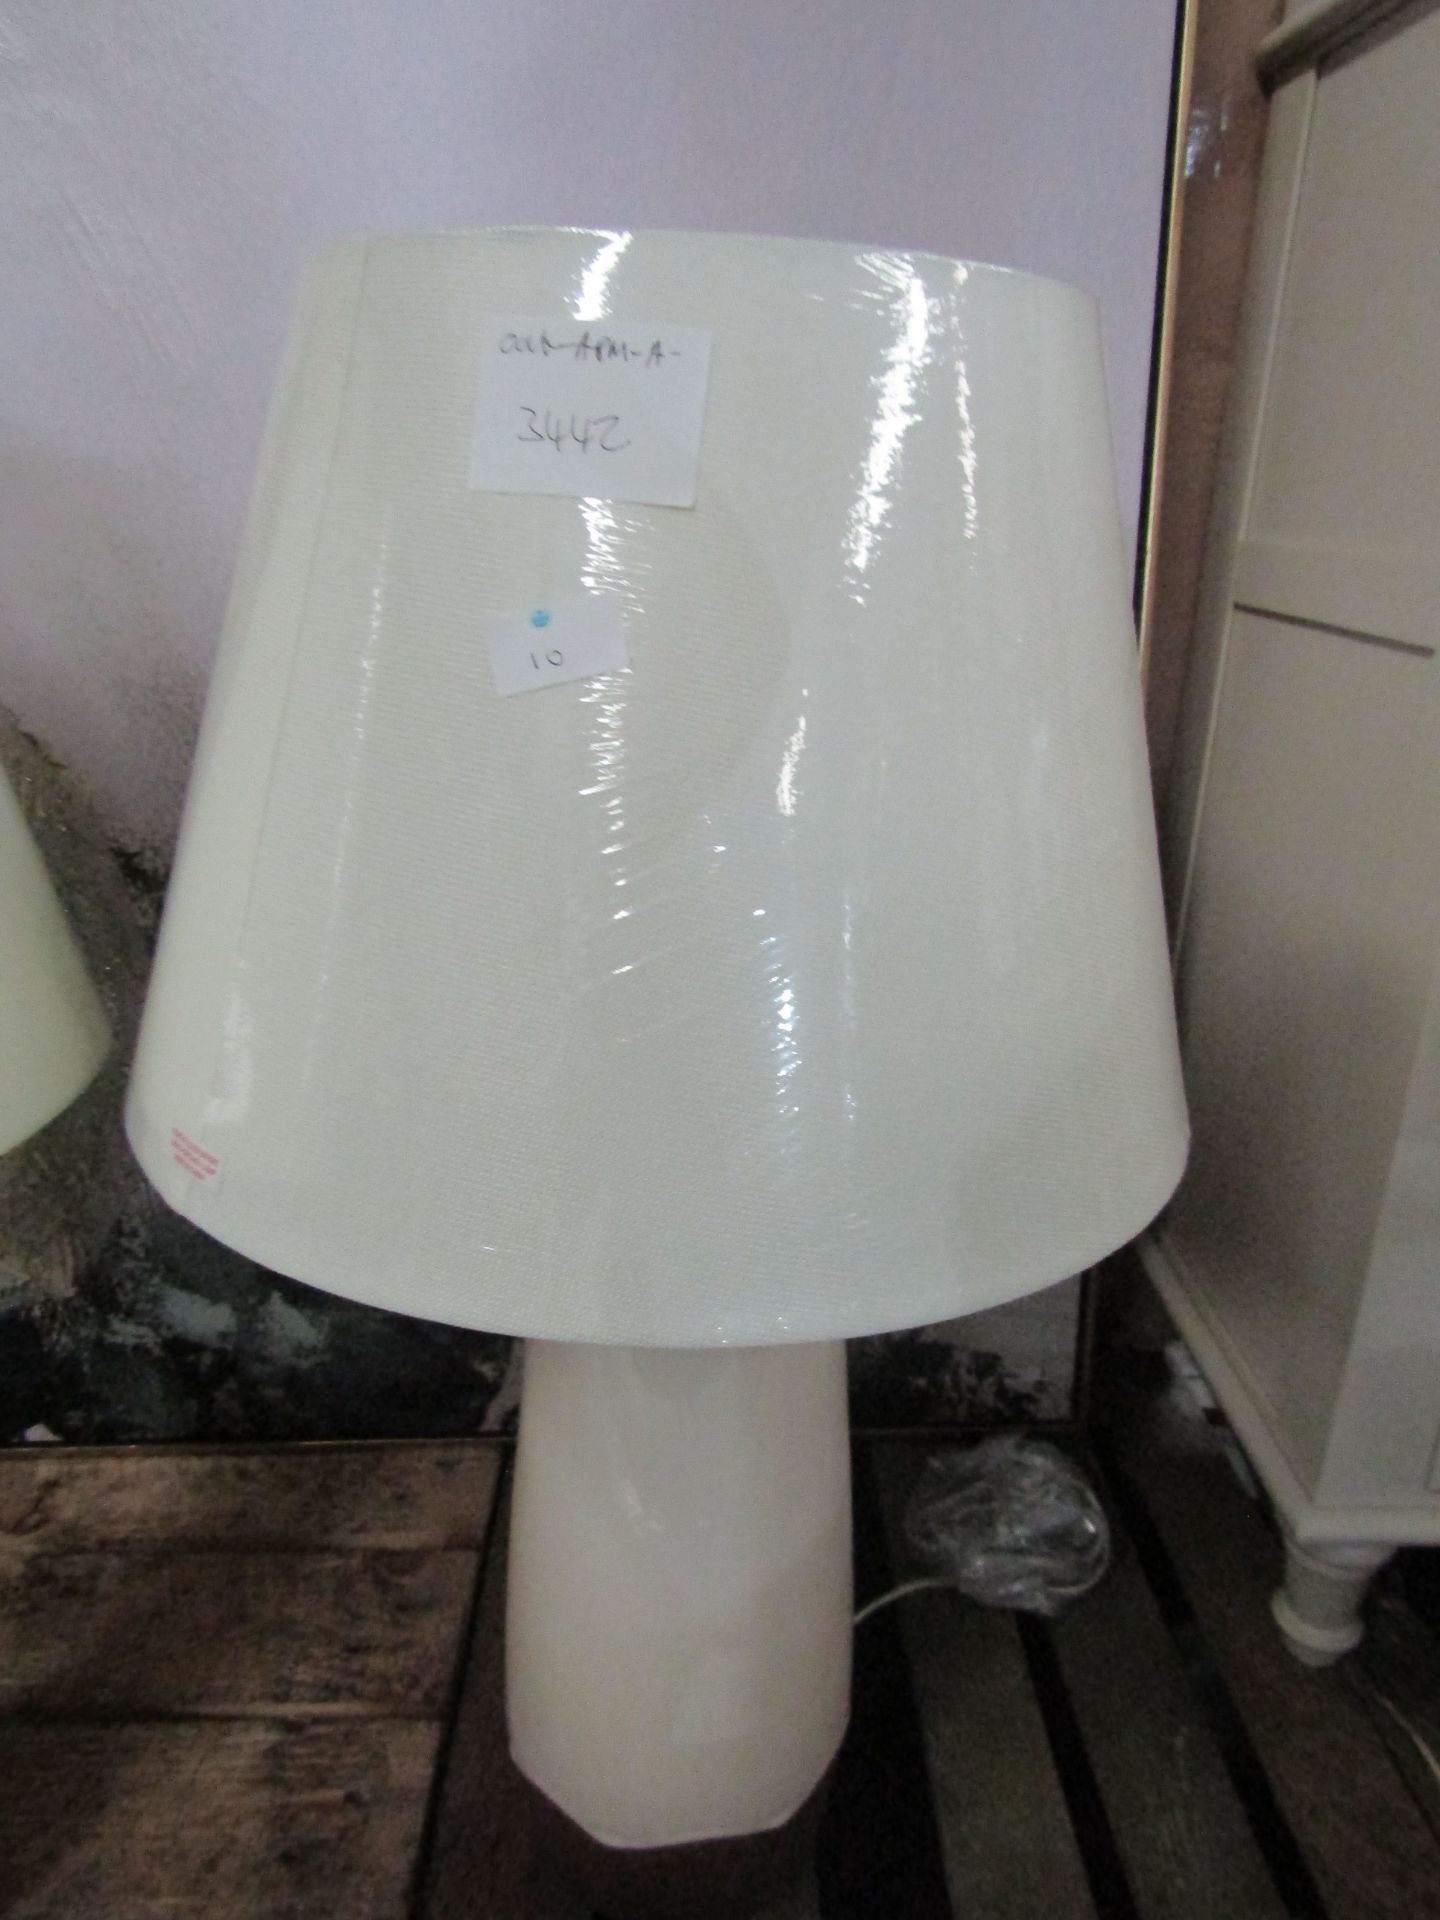 Oak Furnitureland Cavendish Ceramic Table Lamp RRP Â£44.99